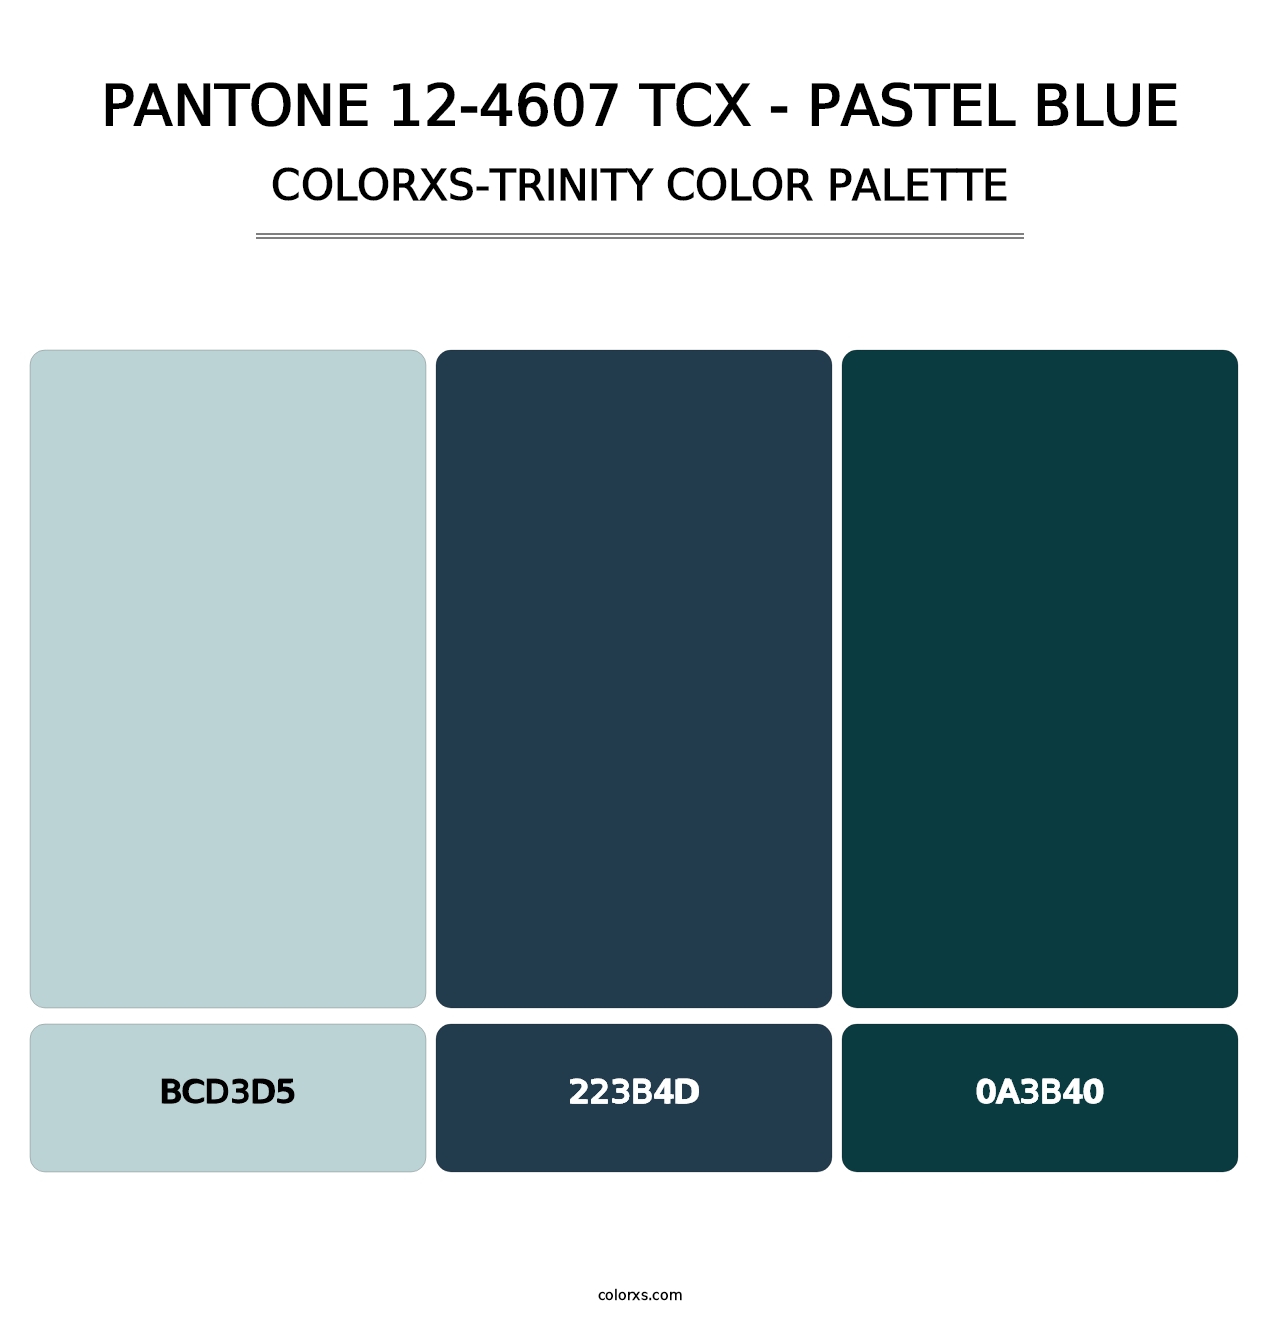 PANTONE 12-4607 TCX - Pastel Blue - Colorxs Trinity Palette